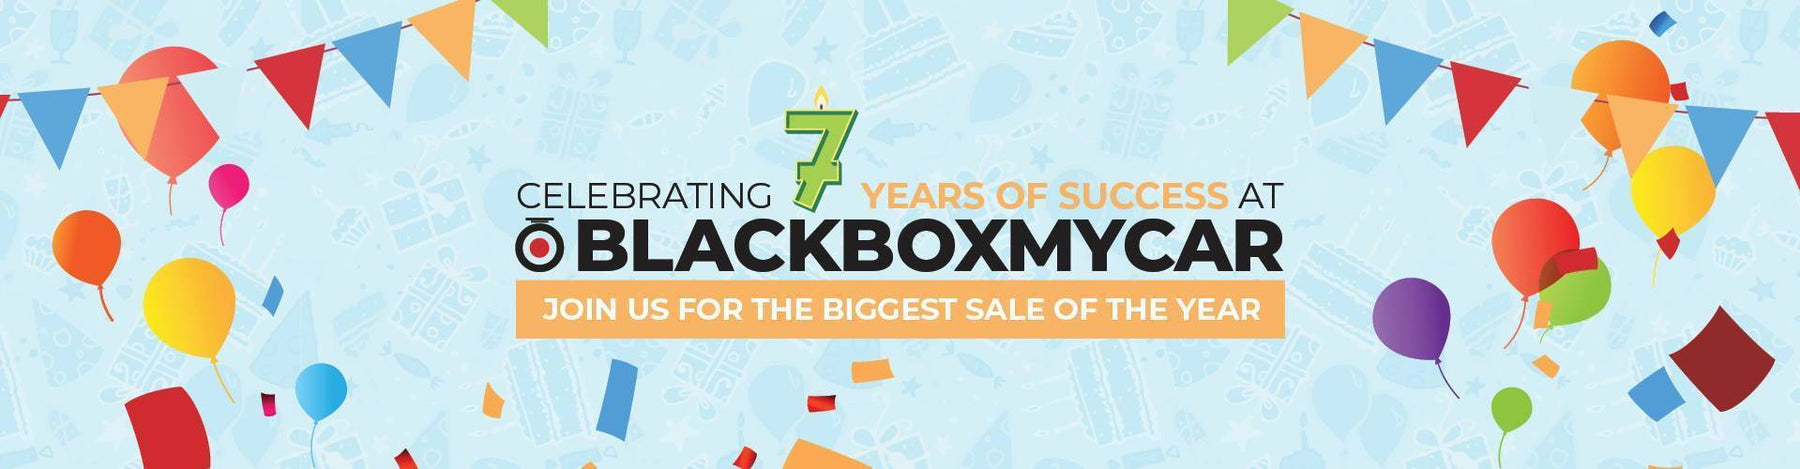 Celebrating Our 7th Year Anniversary at BlackboxMyCar - - BlackboxMyCar